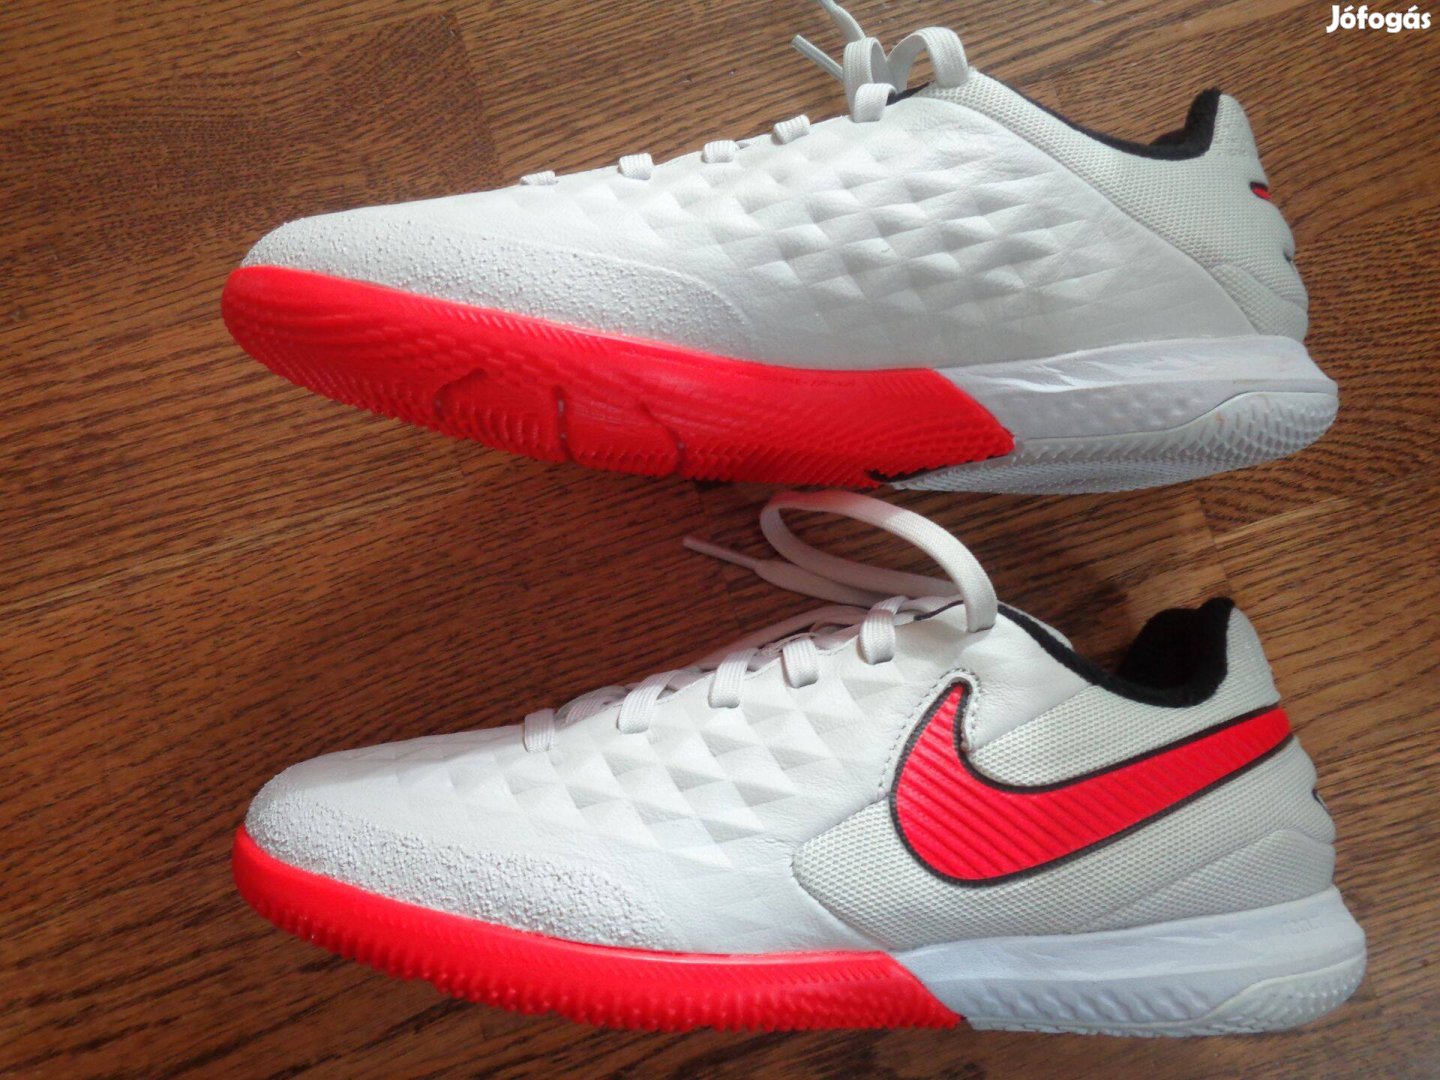 Eredeti új Nike 36,5-es férfi profi terem futballcipő teremcipő cipő